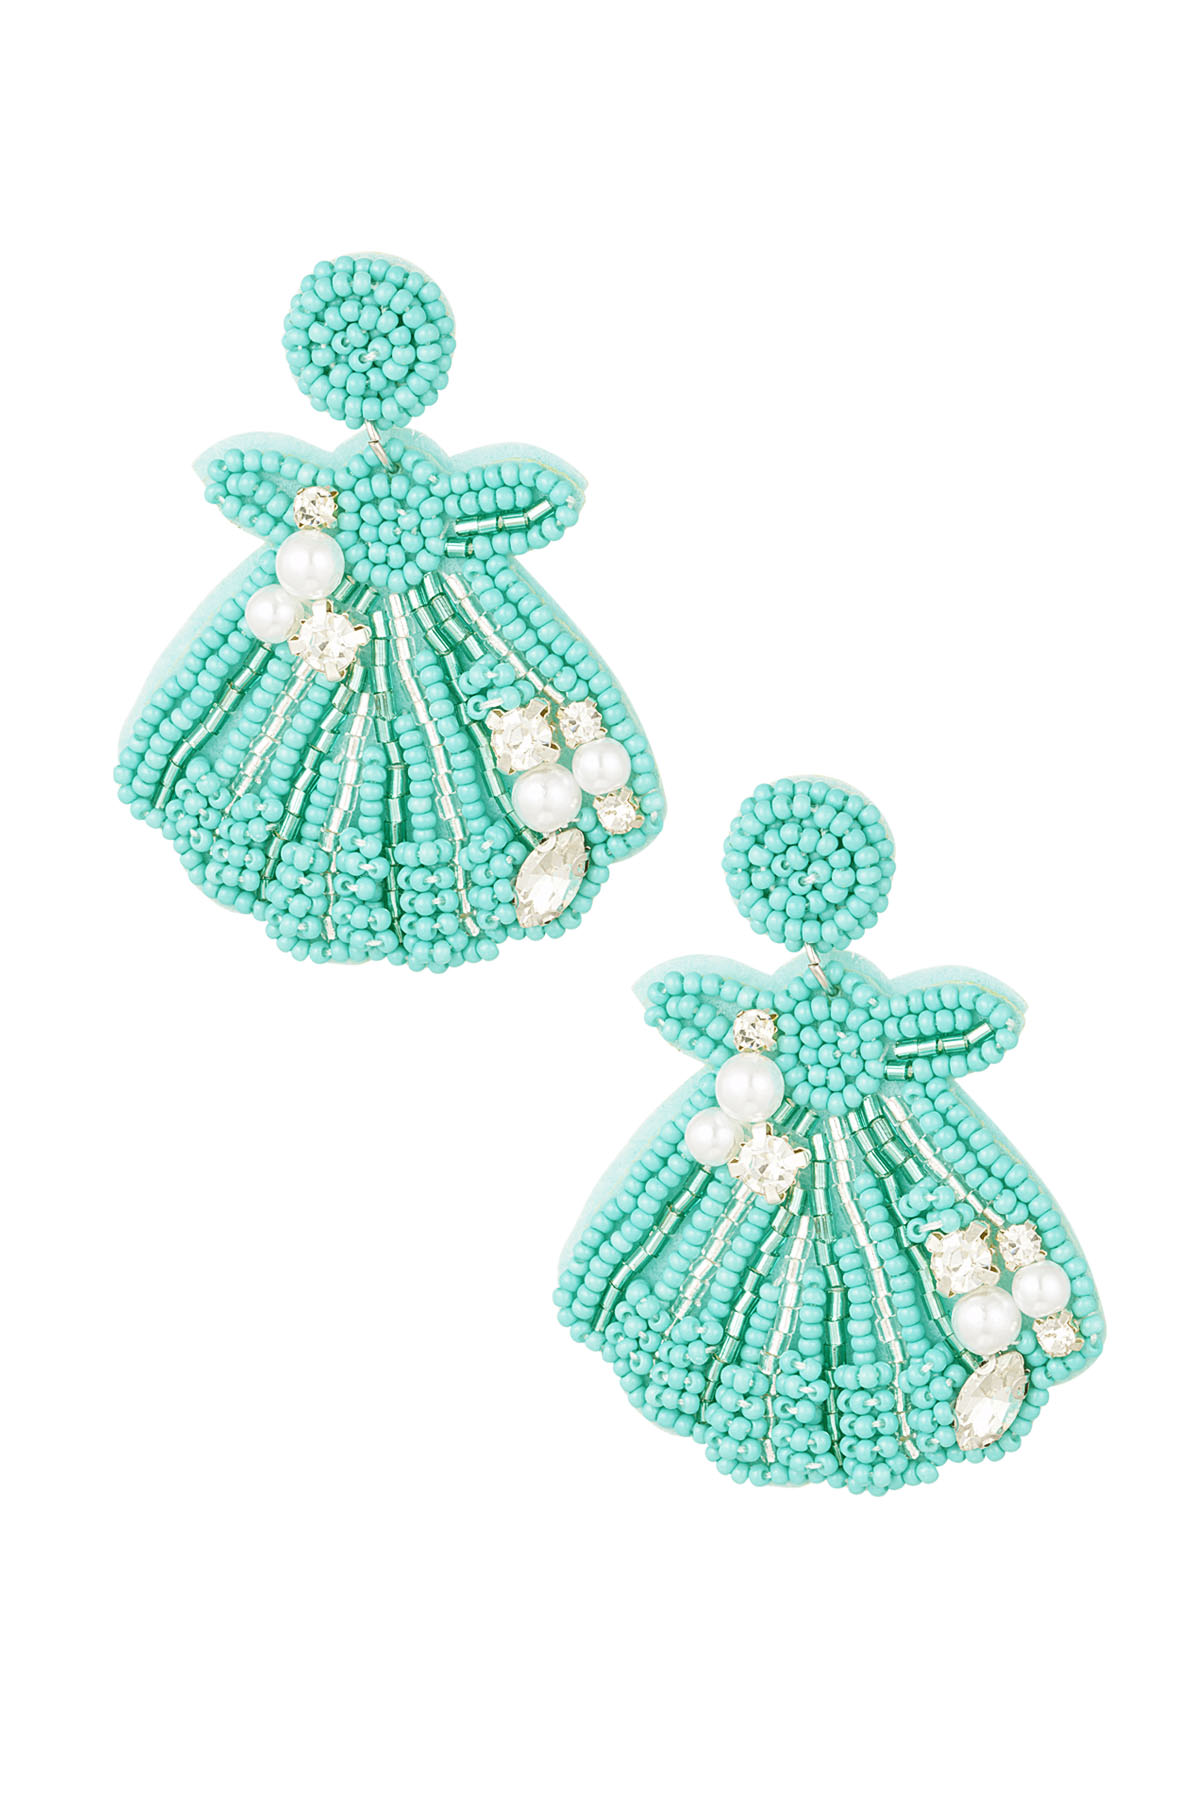 Earrings seashell - turquoise h5 